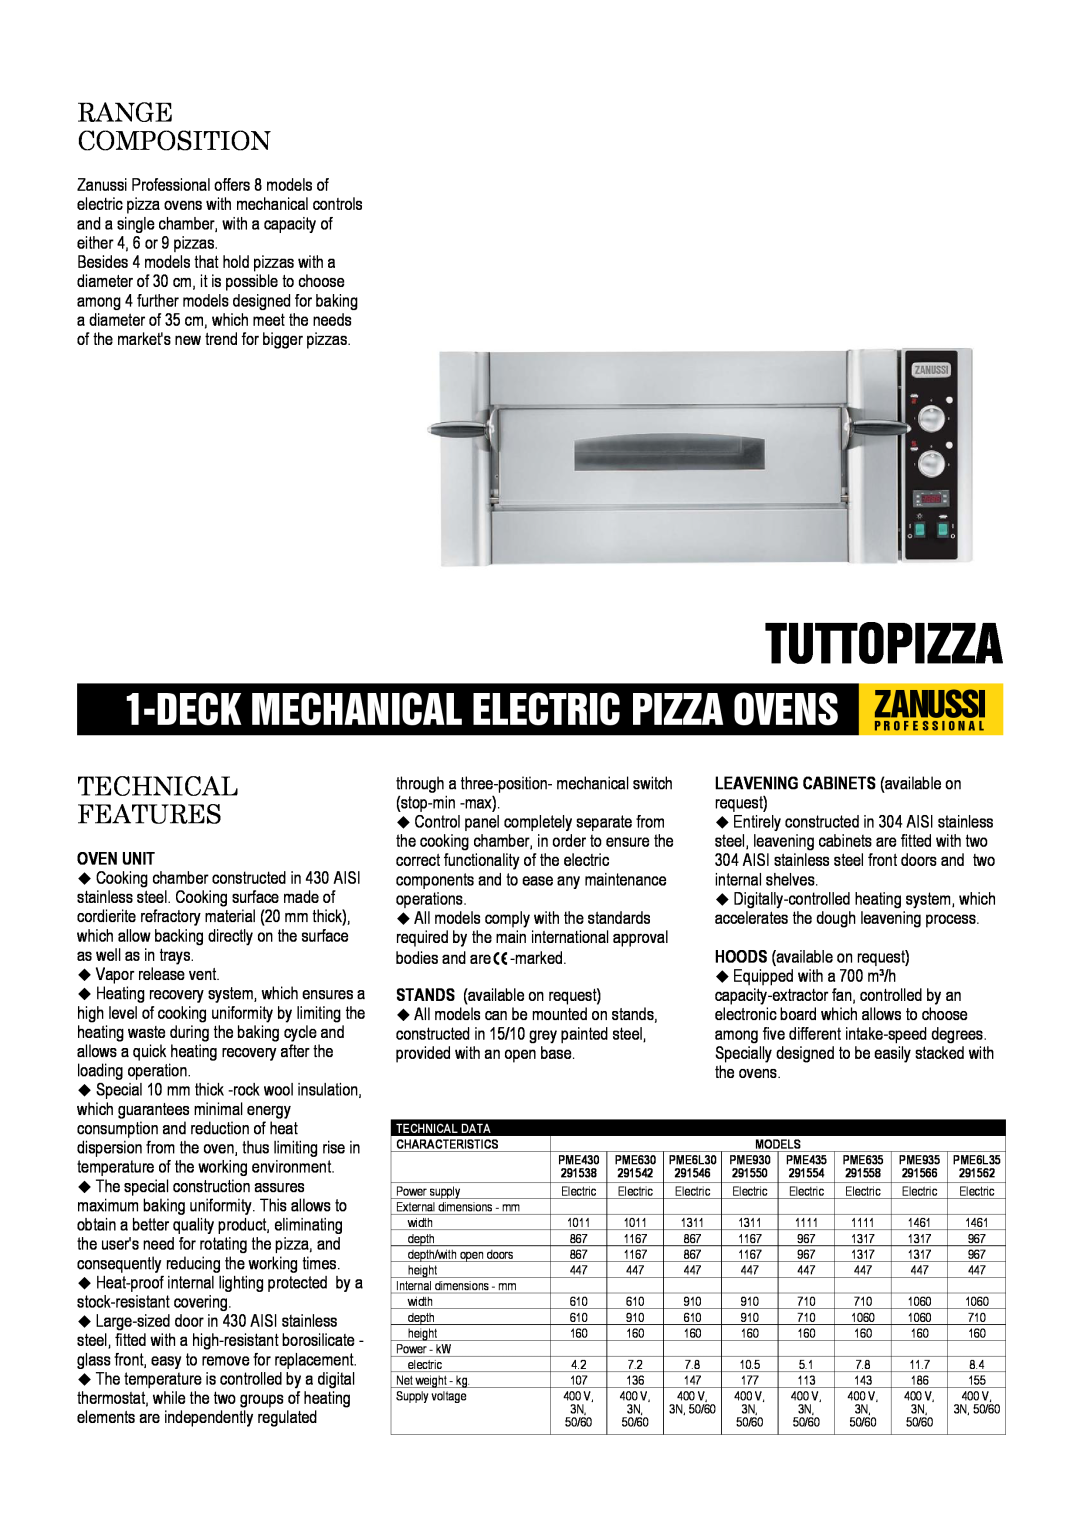 Zanussi 291558 dimensions Tuttopizza, Deckmechanical Electric Pizza Ovens, Zanussi, Range Composition, Technical Features 